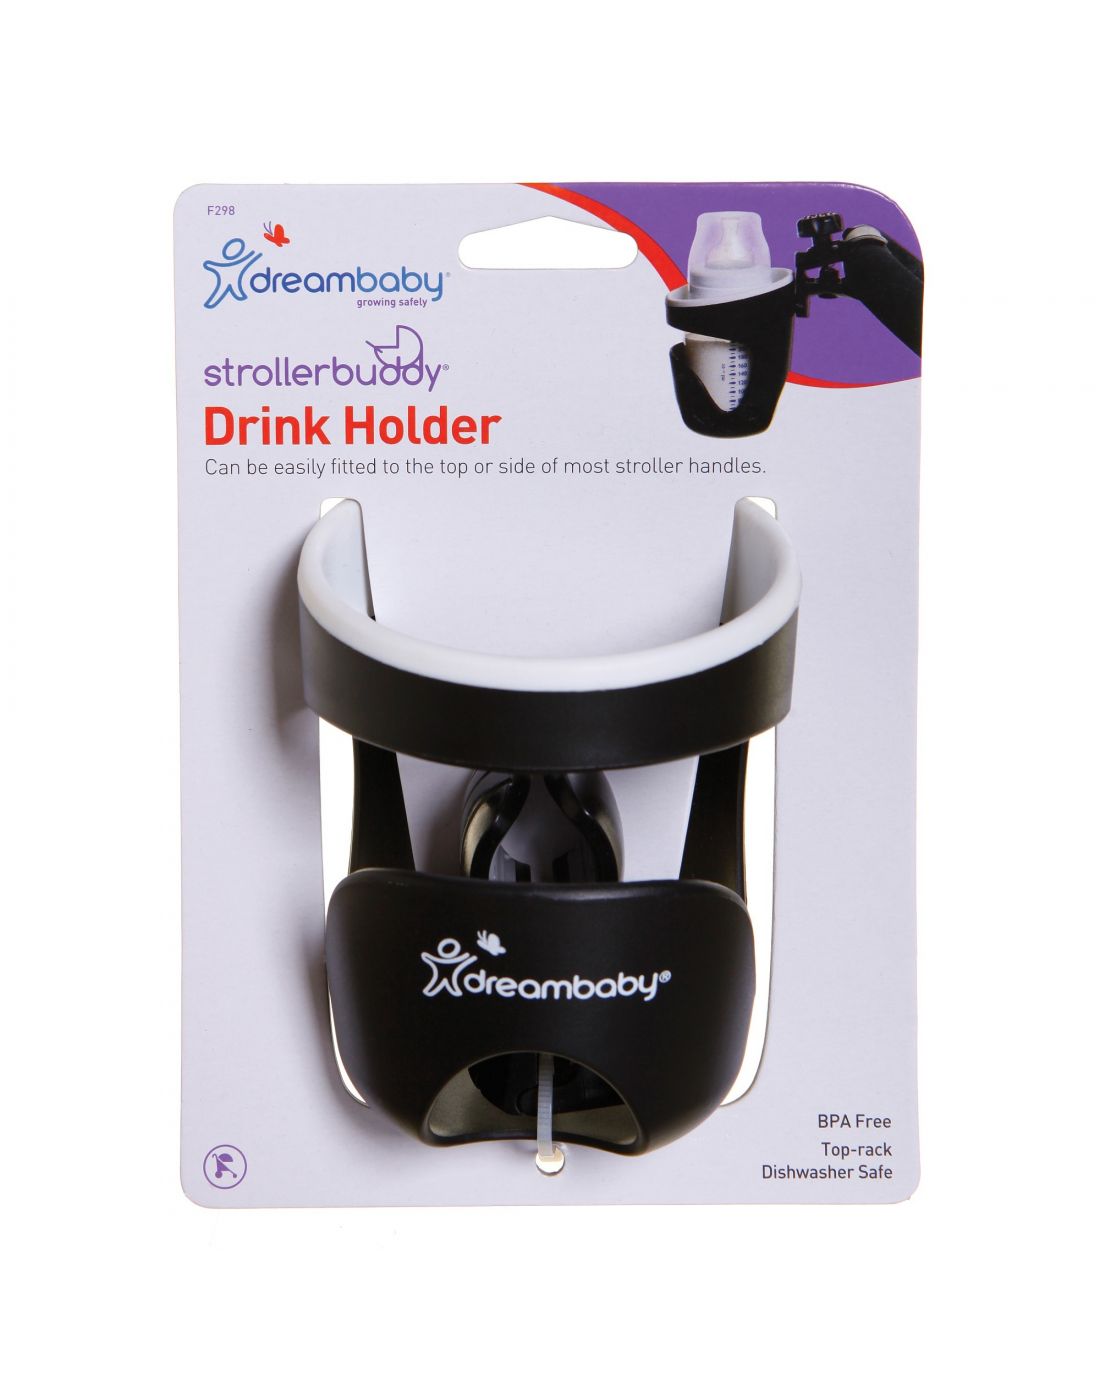 DreamBaby Stroller Buddy  Drink Holder black